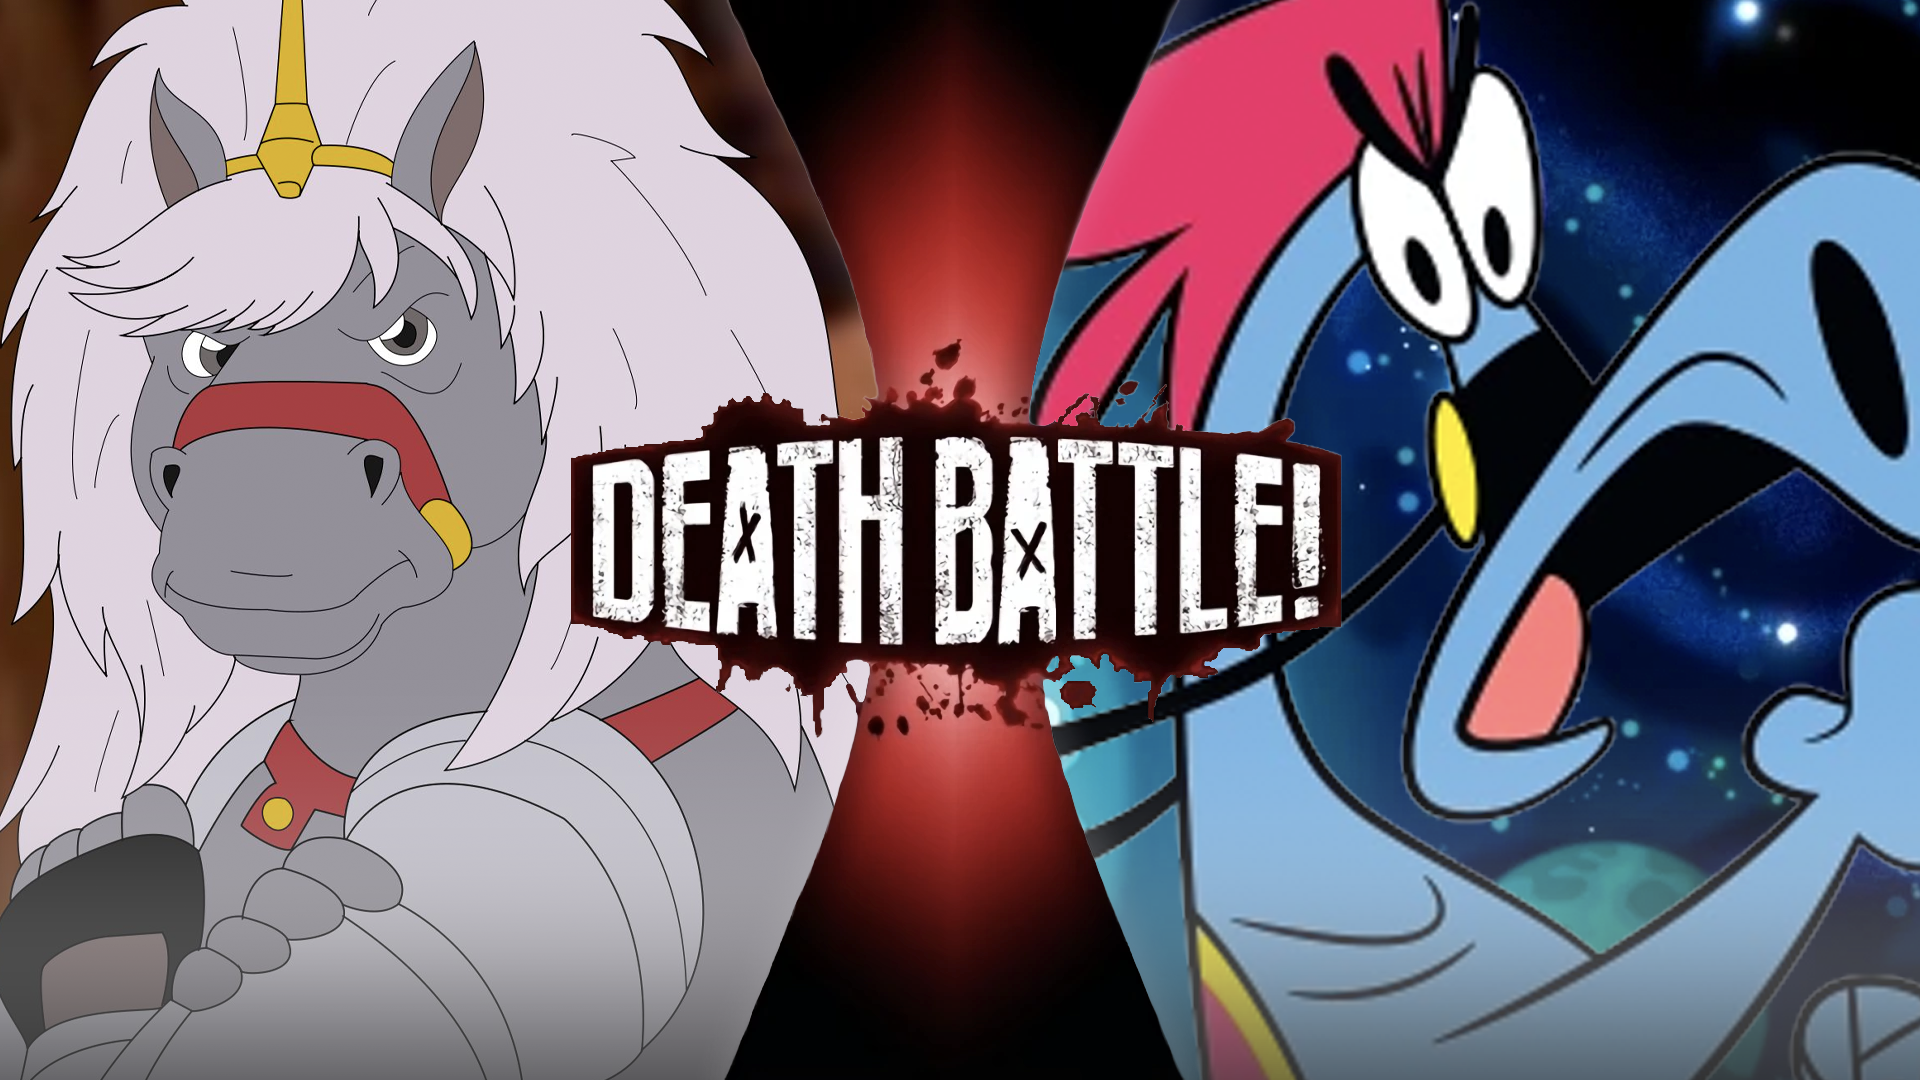 Deathmatch: Leela vs. Stockfish